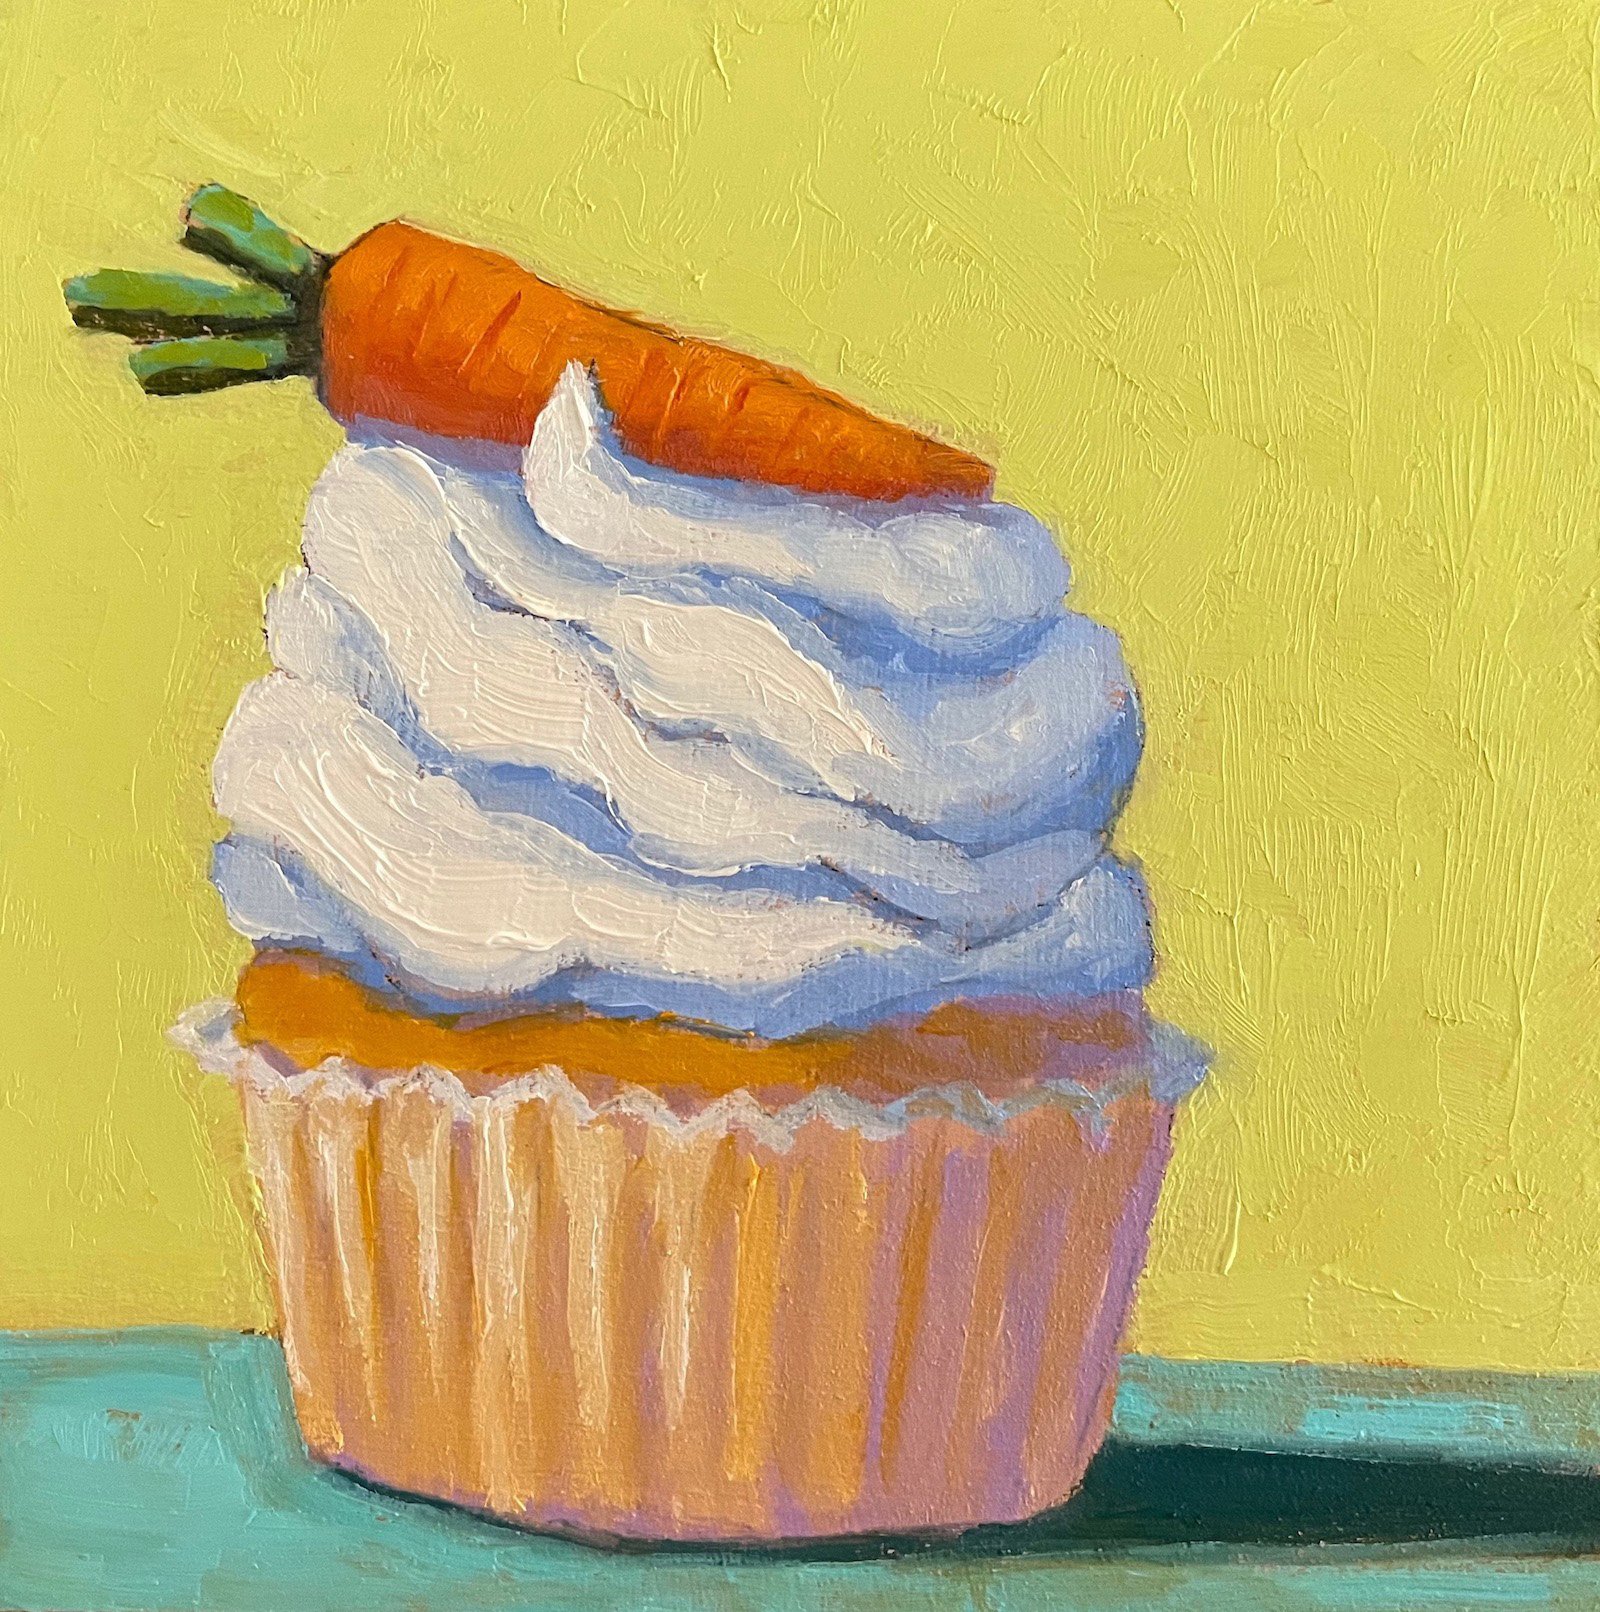 Carrot Cupcake by Pat Doherty